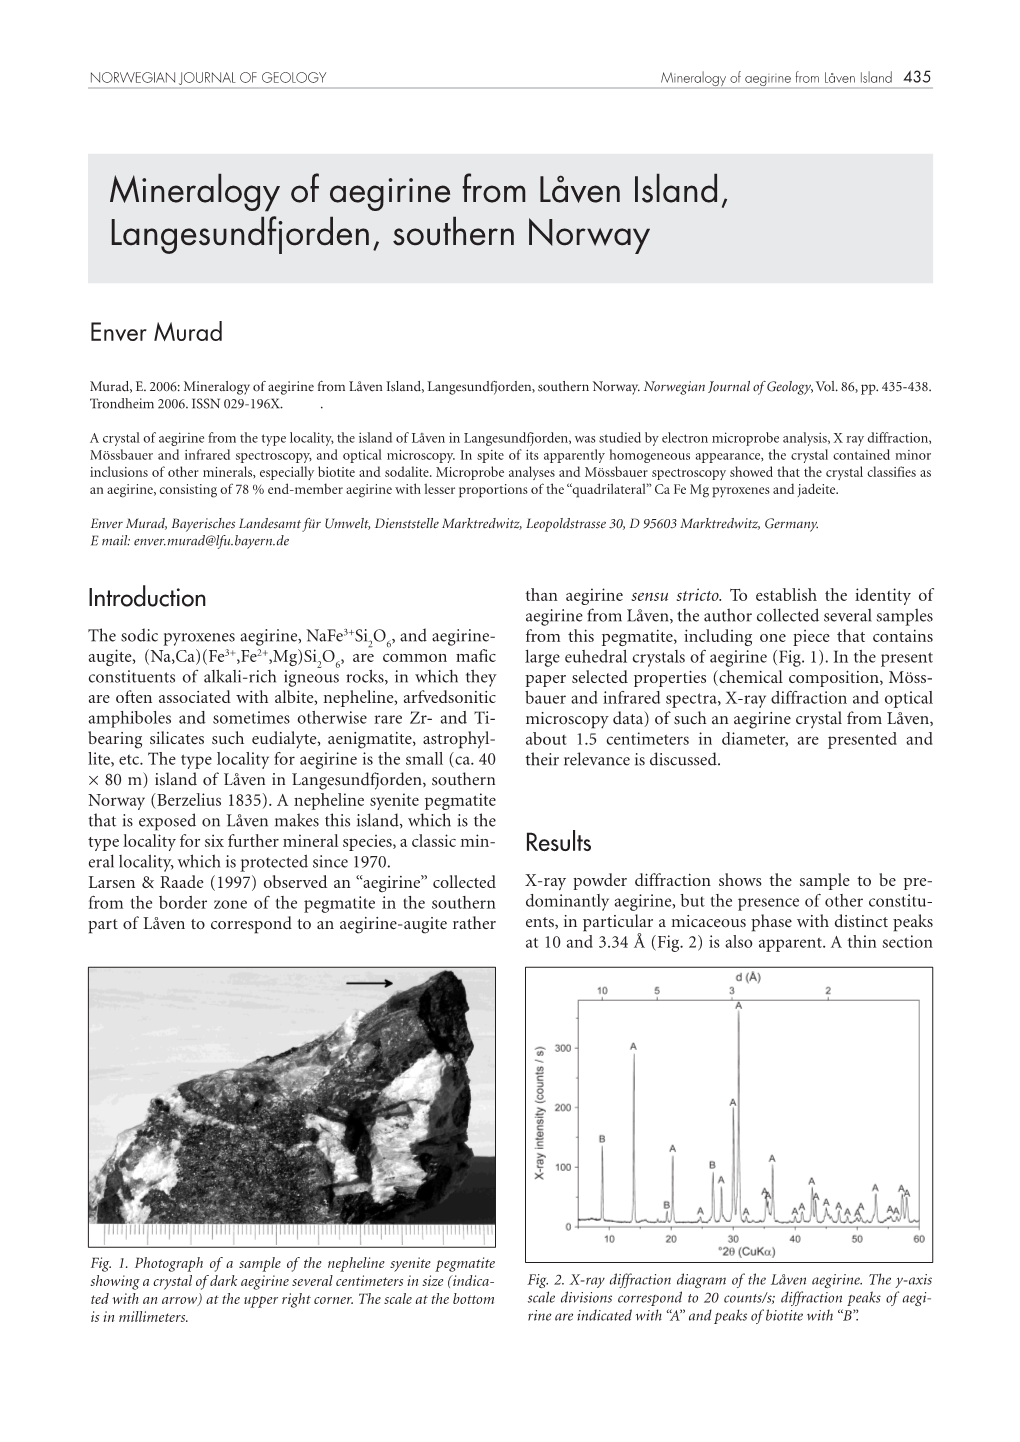 Mineralogy of Aegirine from Låven Island, Langesundfjorden, Southern Norway